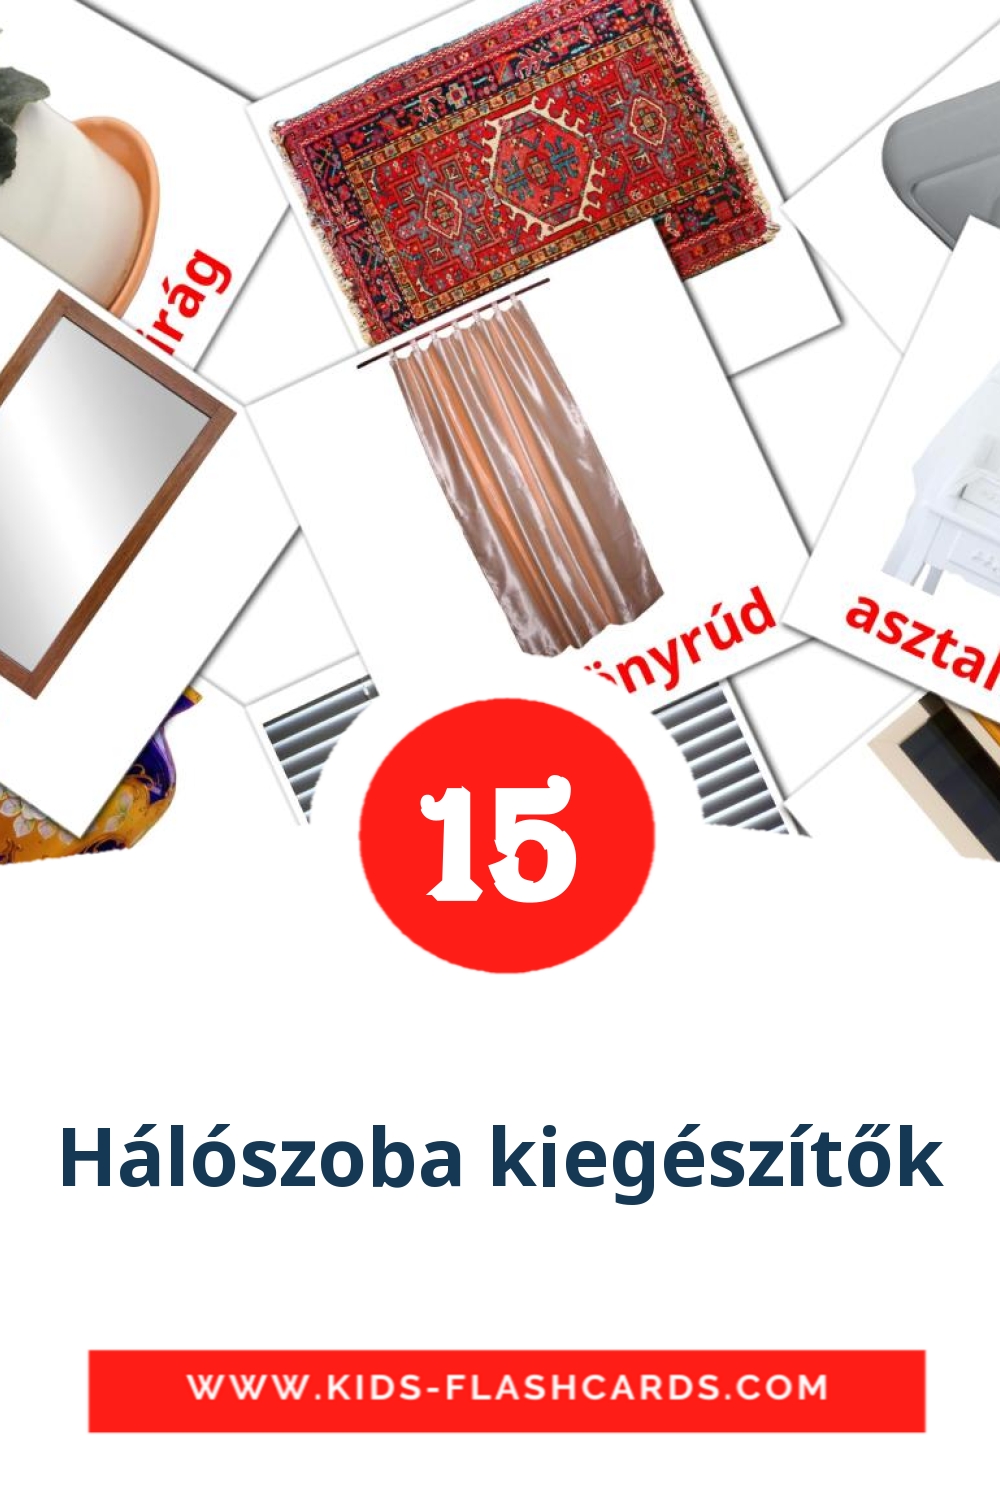 15 Hálószoba kiegészítők Bildkarten für den Kindergarten auf Ungarisch